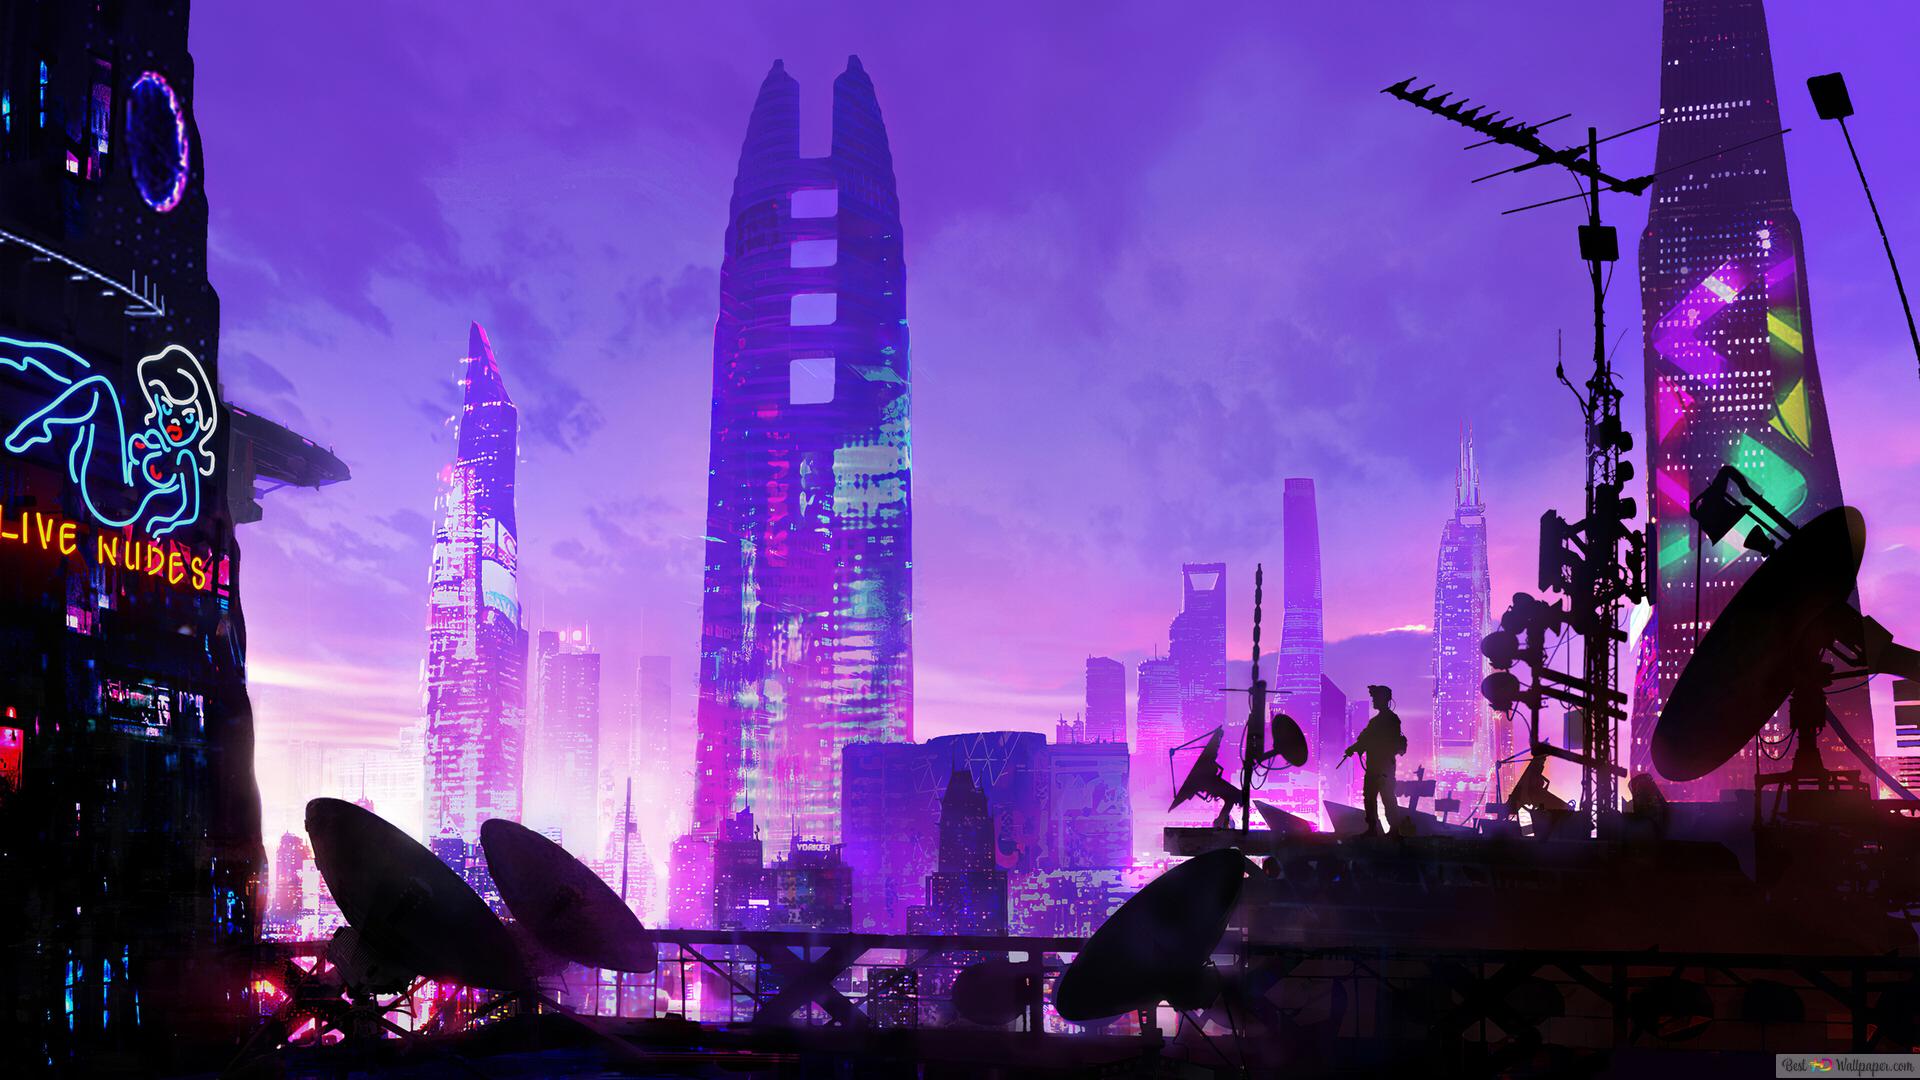 Cyberpunk City Minimalist 4K wallpaper download